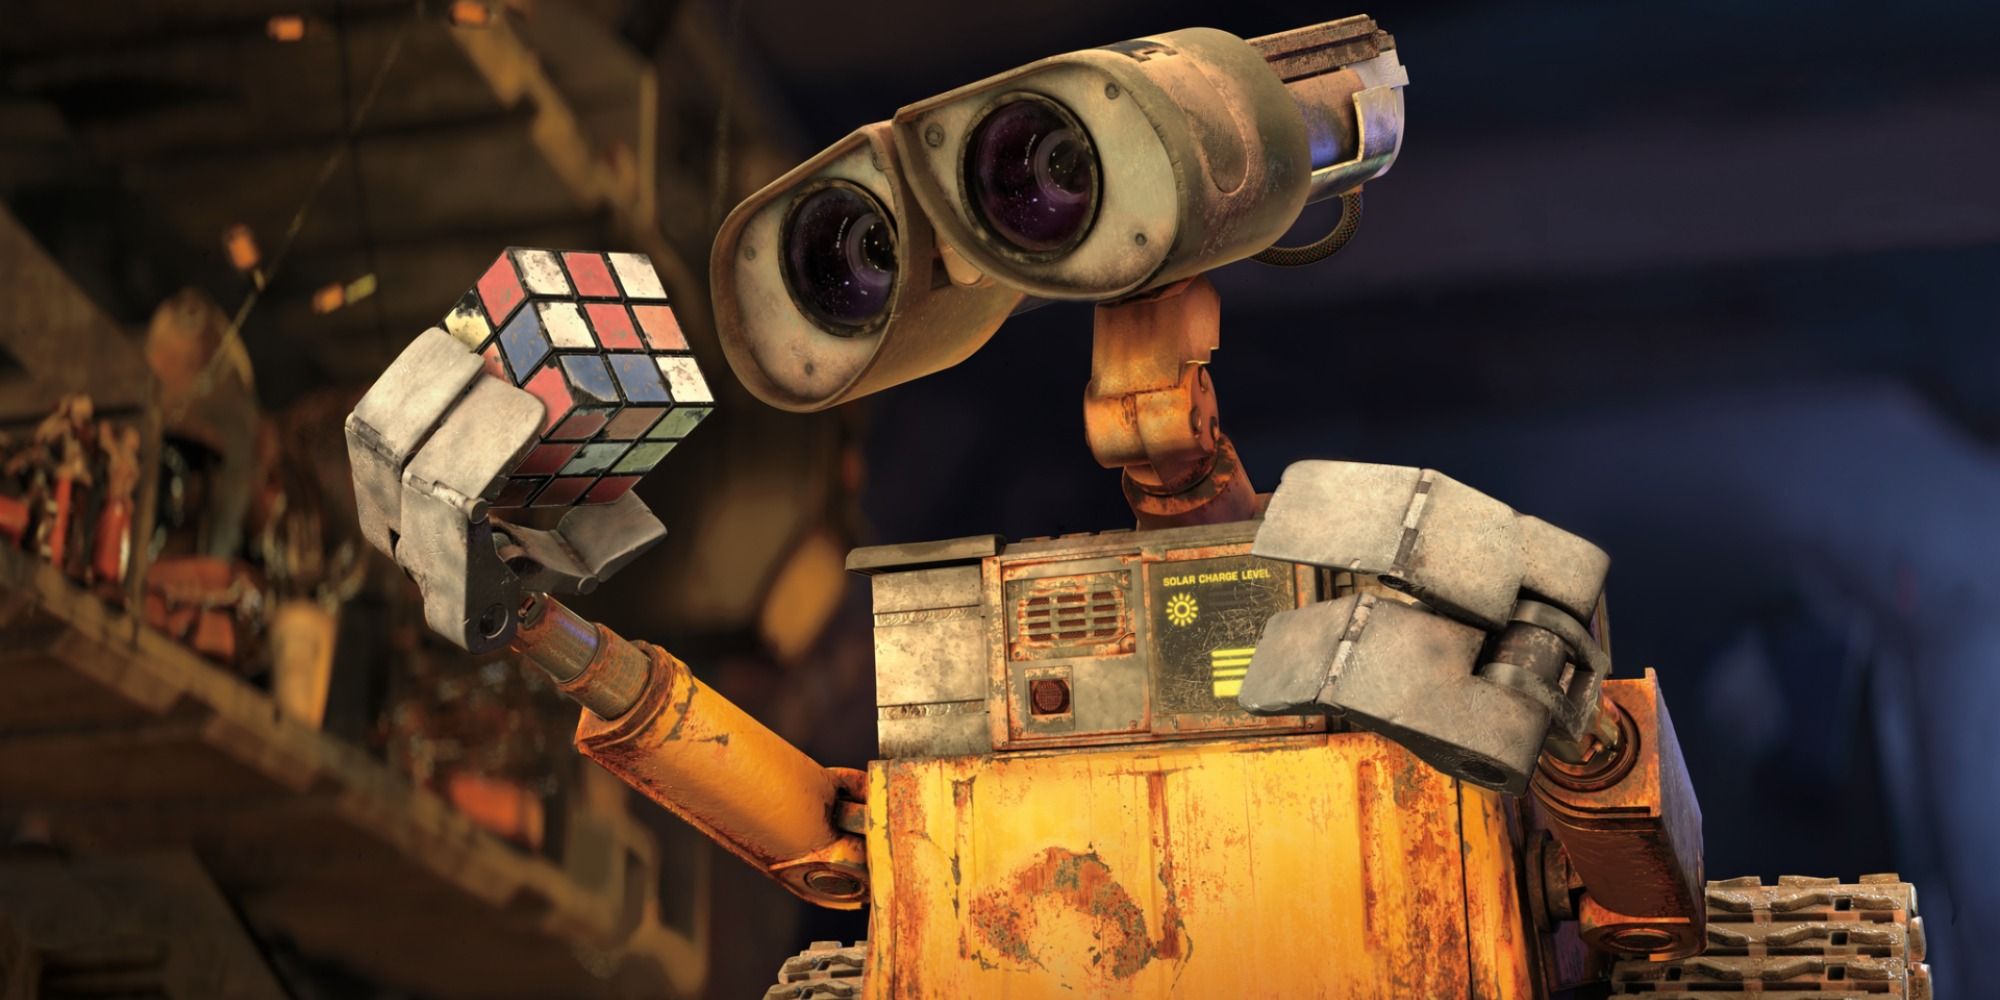 Wall - E looking at a Rubik's Cube 